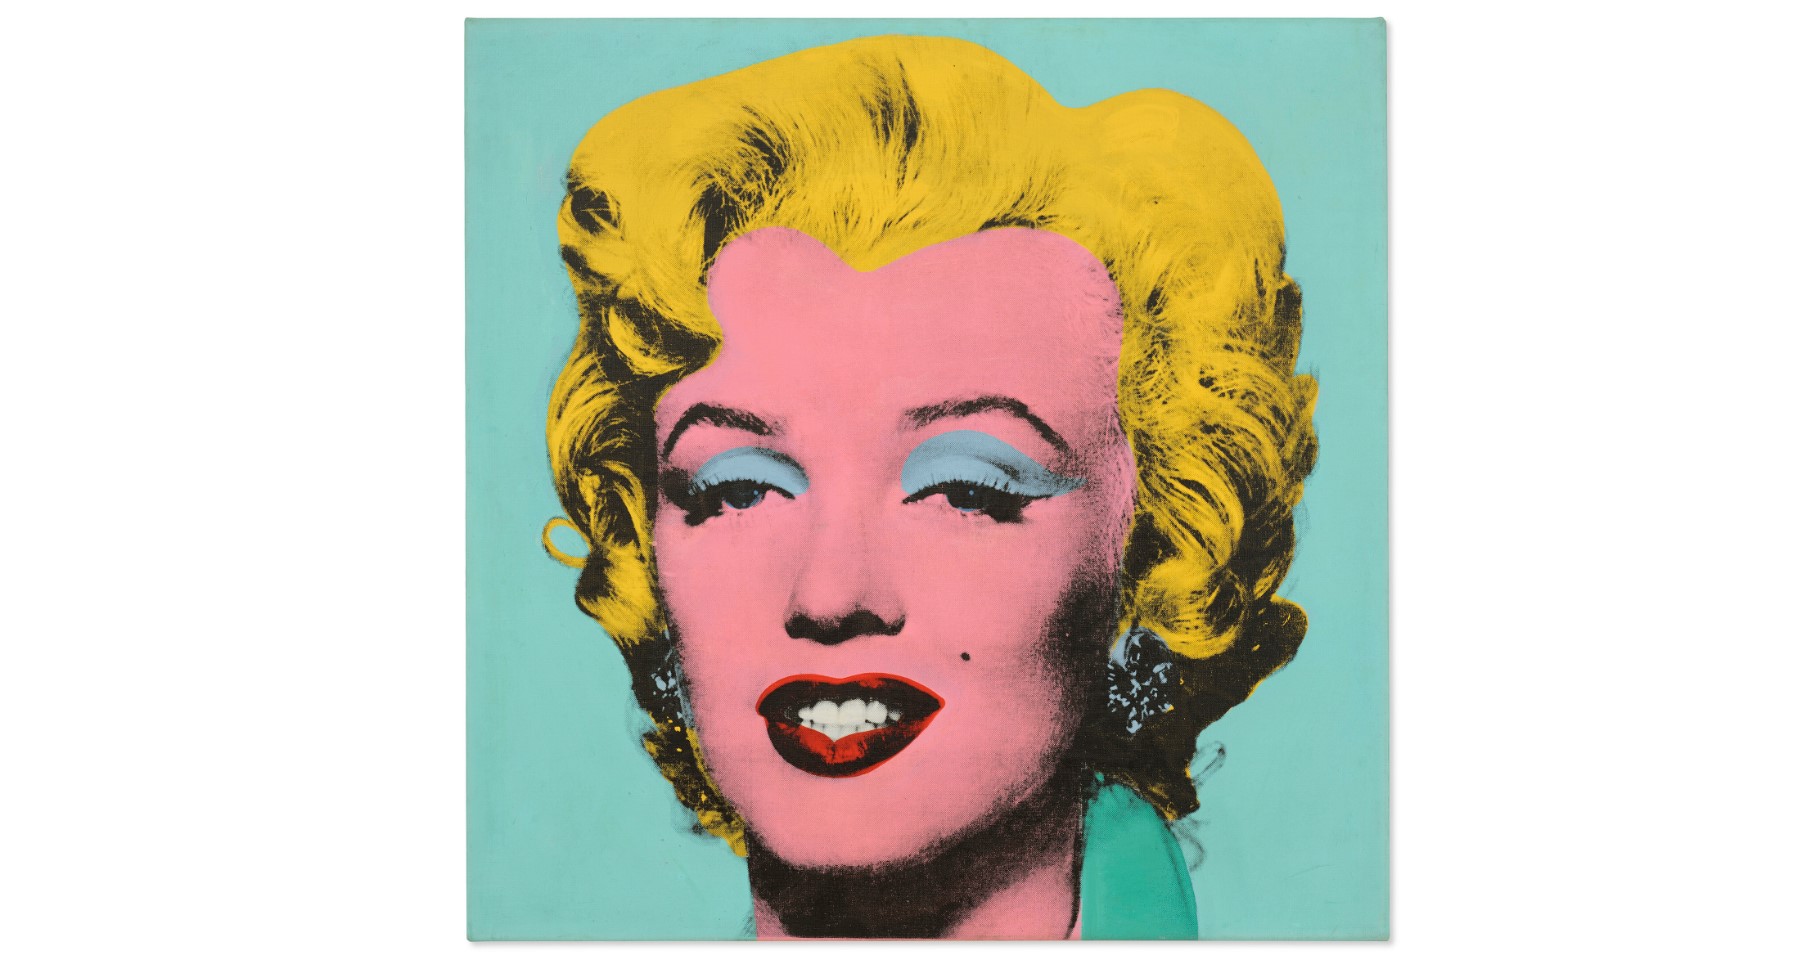 Andy Warhols Marilyn Monroe Portrait Sells For Record 195 Million Maxim